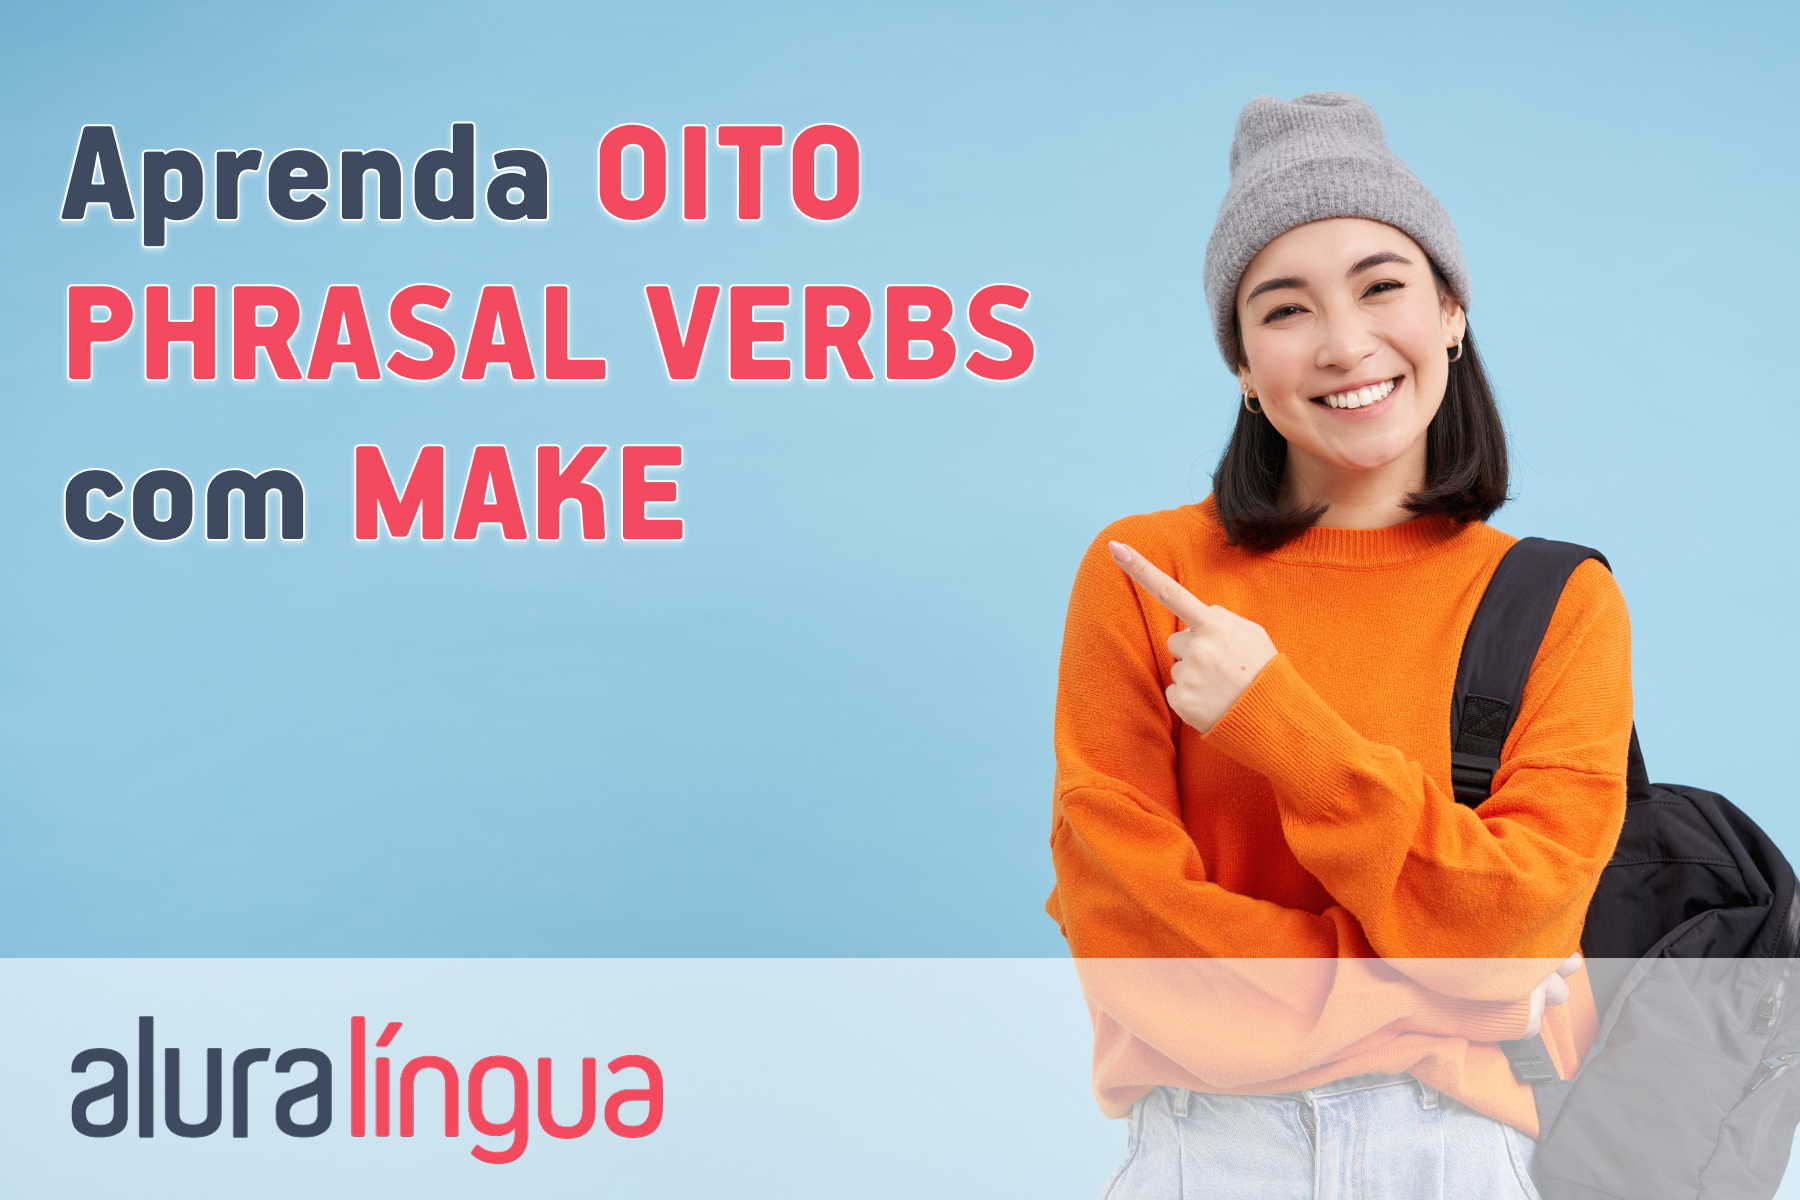 Aprenda 8 phrasal verbs com make #inset